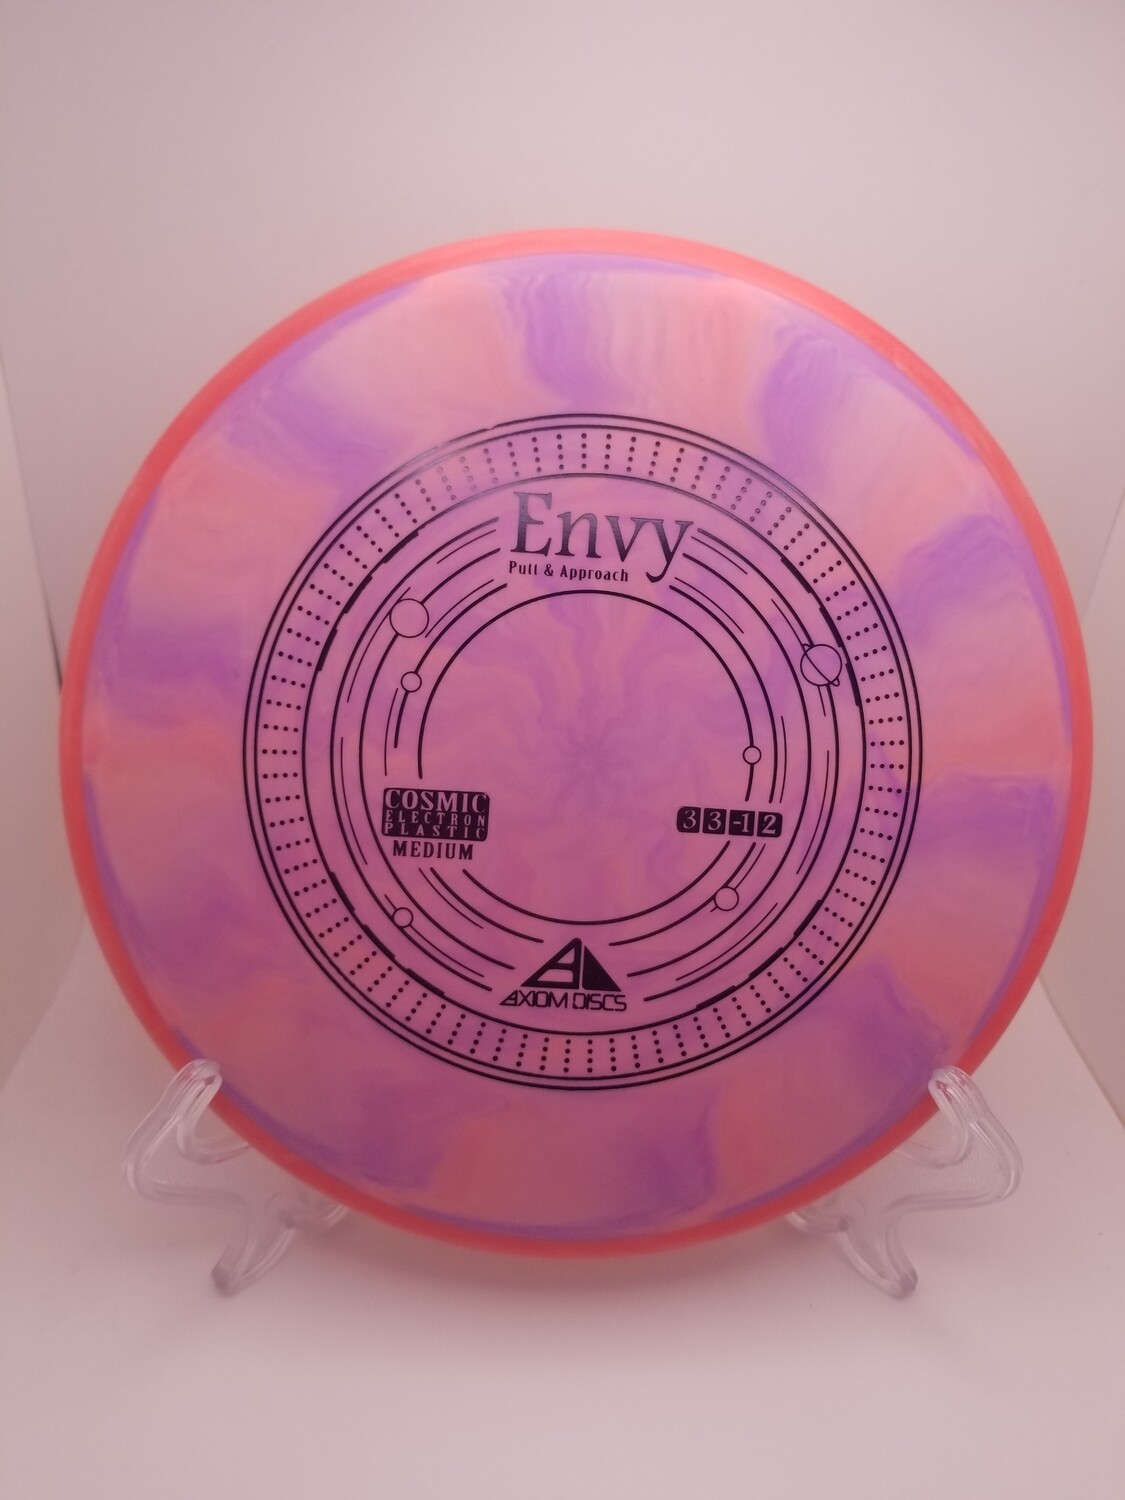 Axiom Discs Envy Pink/Purple Swirl with Red Rim Cosmic Electron Plastic Medium 172g